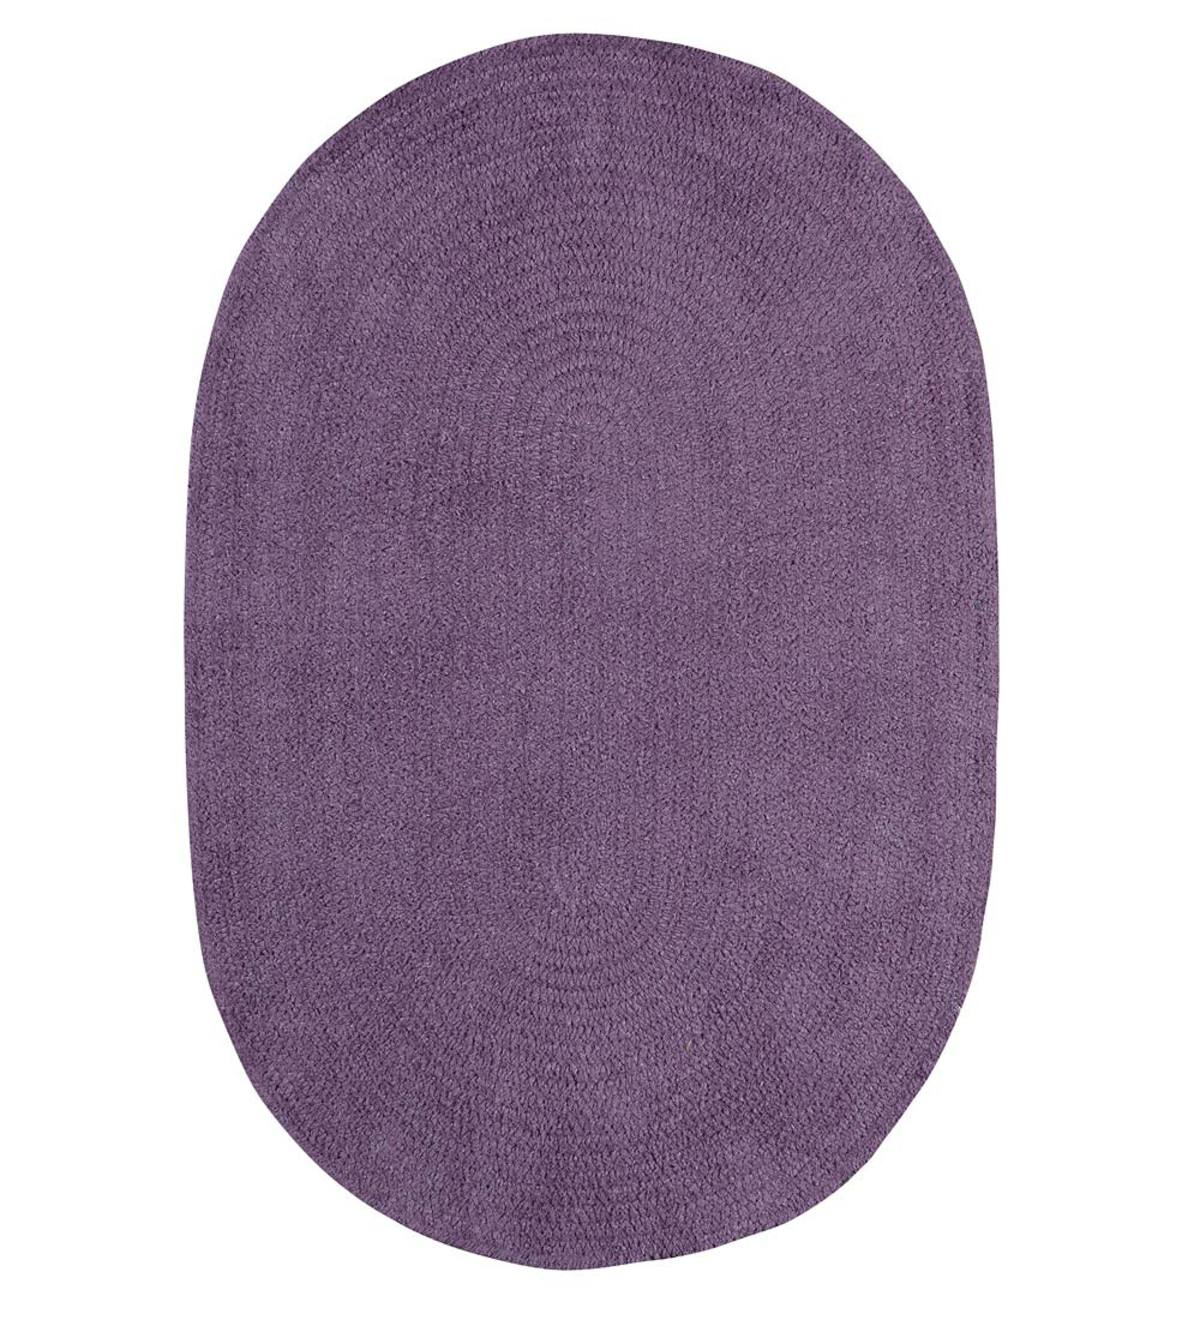 Chenille Oval Braided Area Rug, 9' x 12' - Wistful Purple